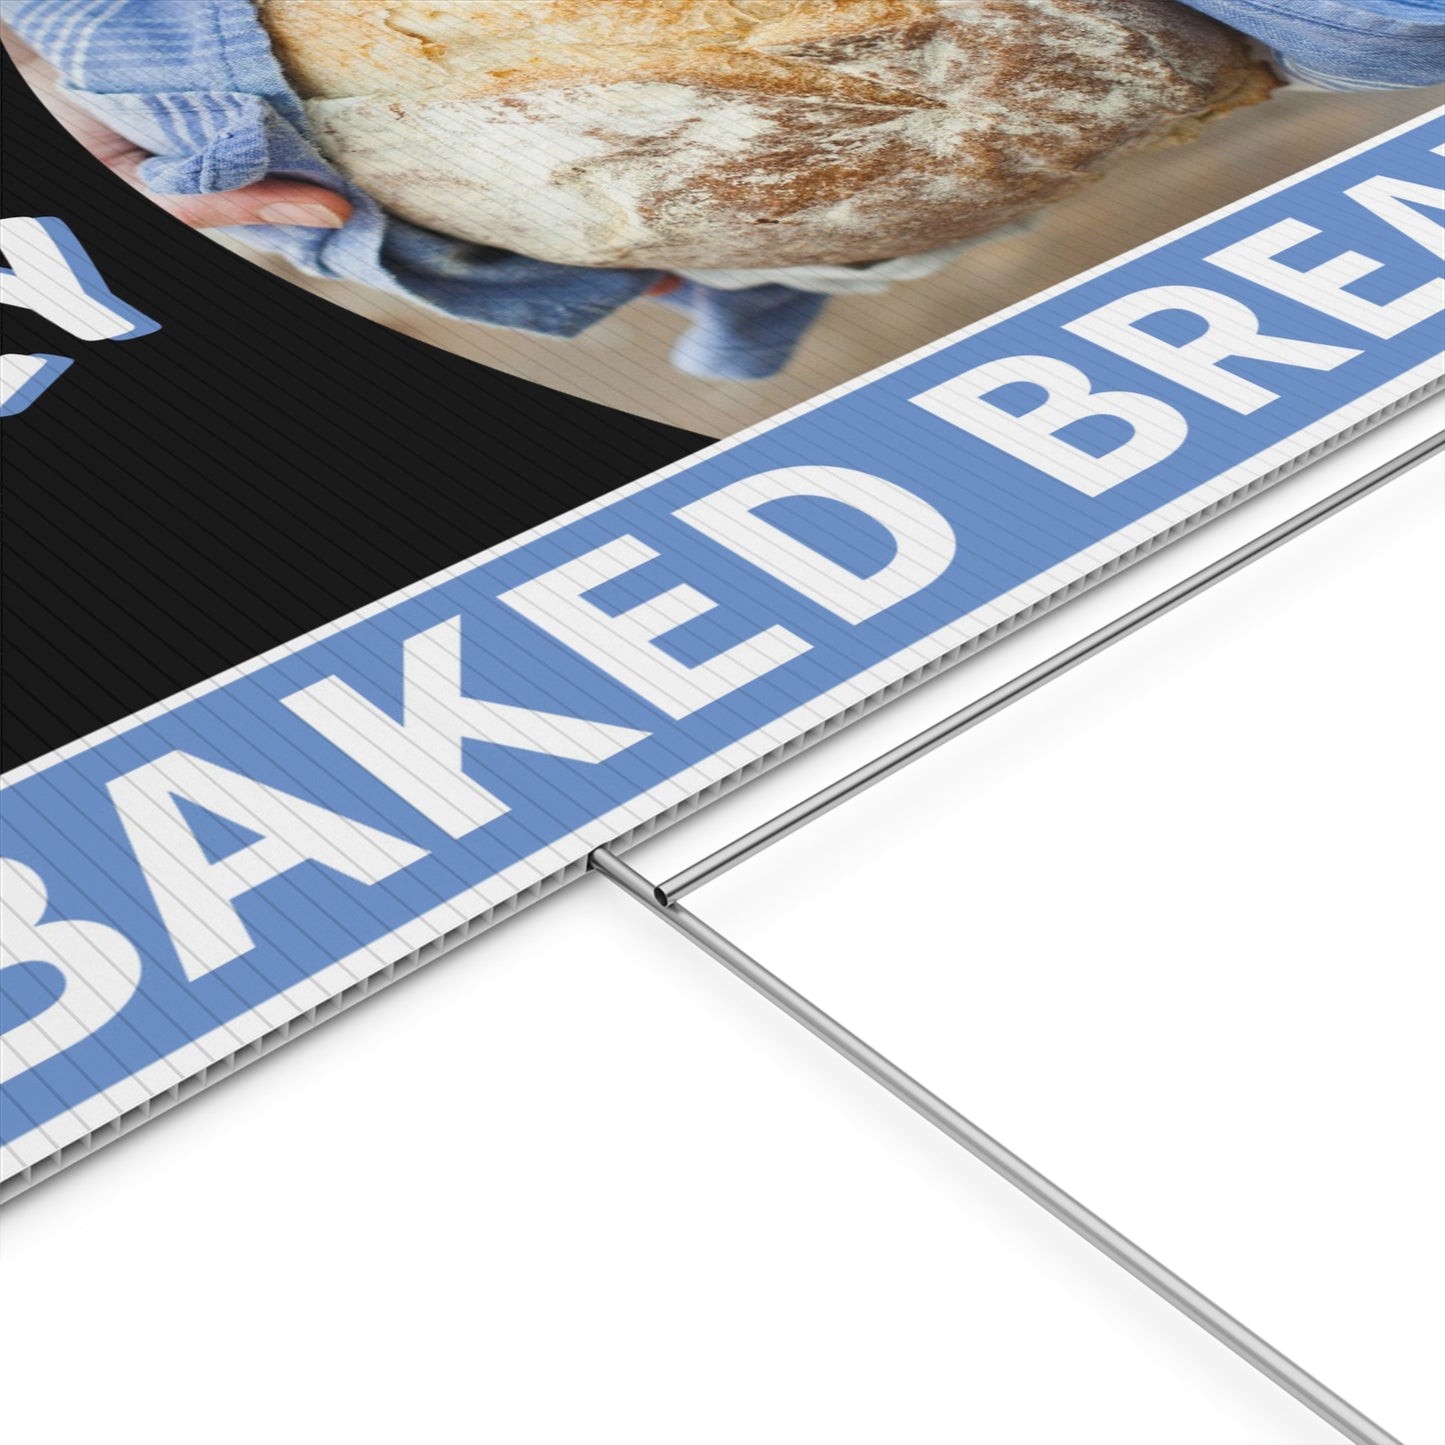 Fresh Baked Bread, Yard Sign, 18x12, 24x18, 36x24, v2